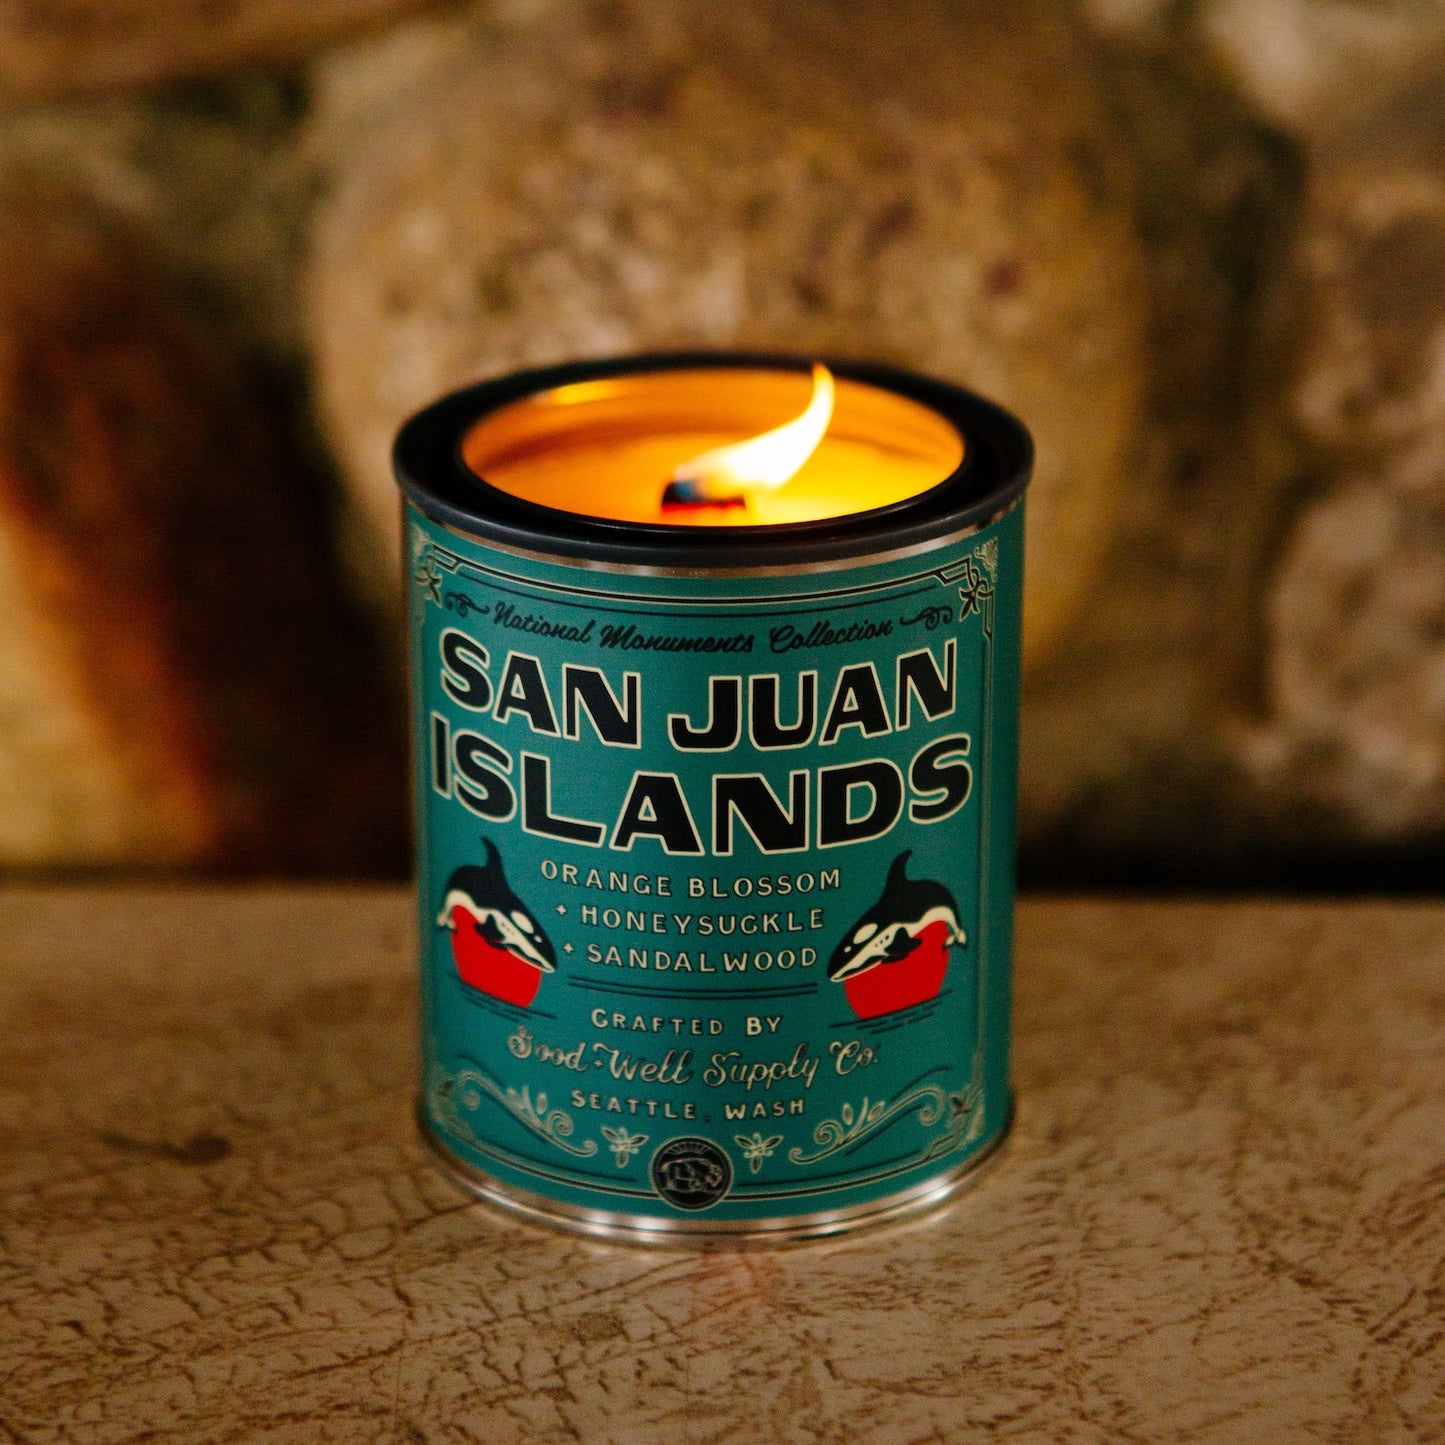 San Juan Islands National Monument Candle